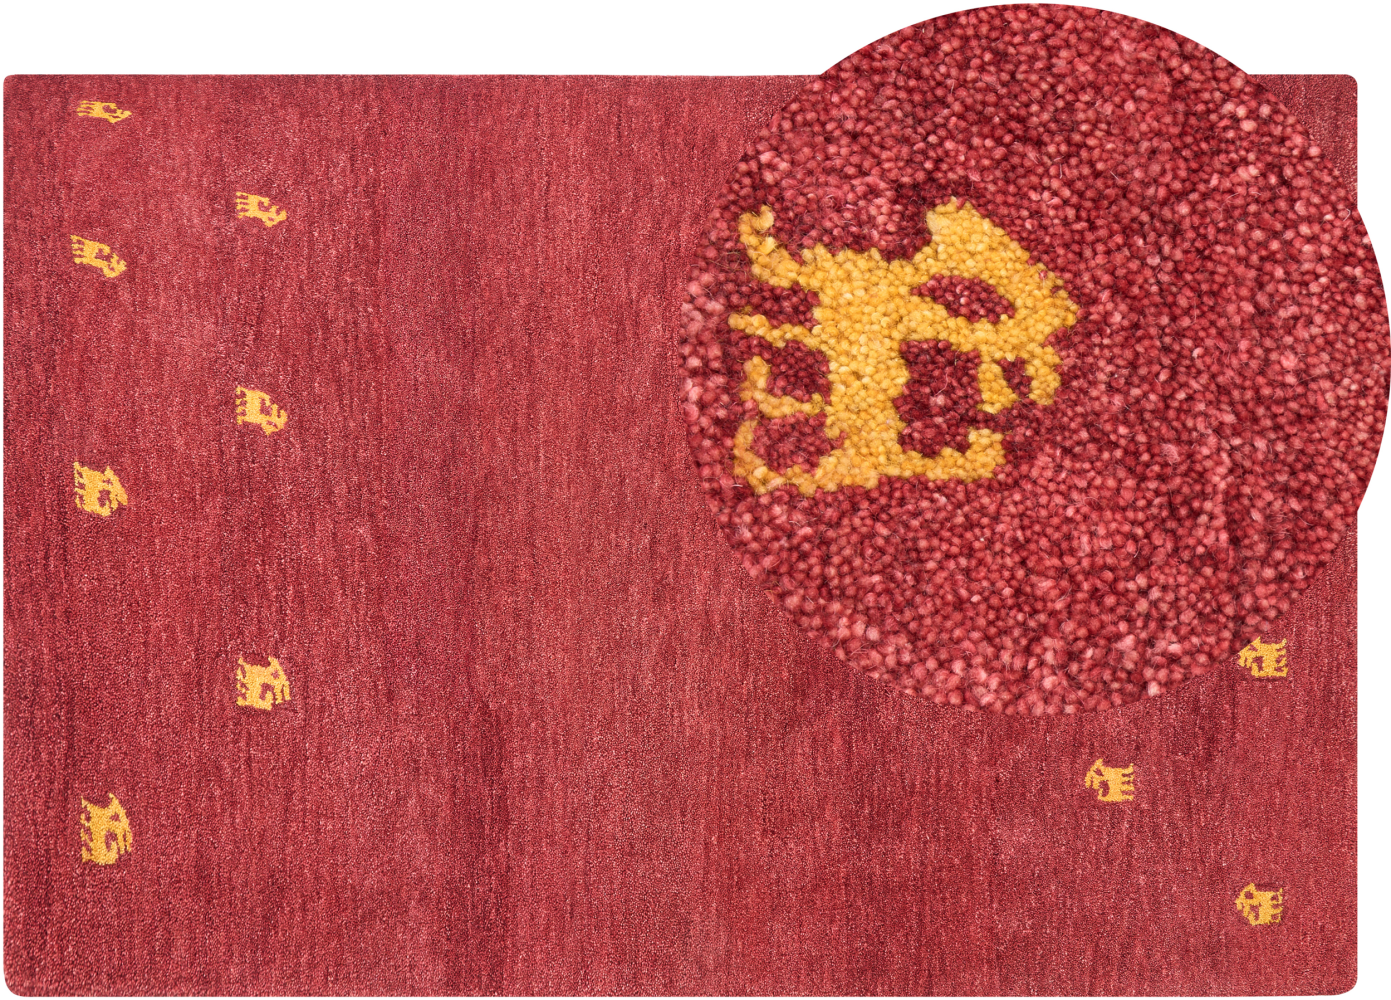 Gabbeh Teppich Wolle rot 140 x 200 cm abstraktes Muster Hochflor YARALI Bild 1